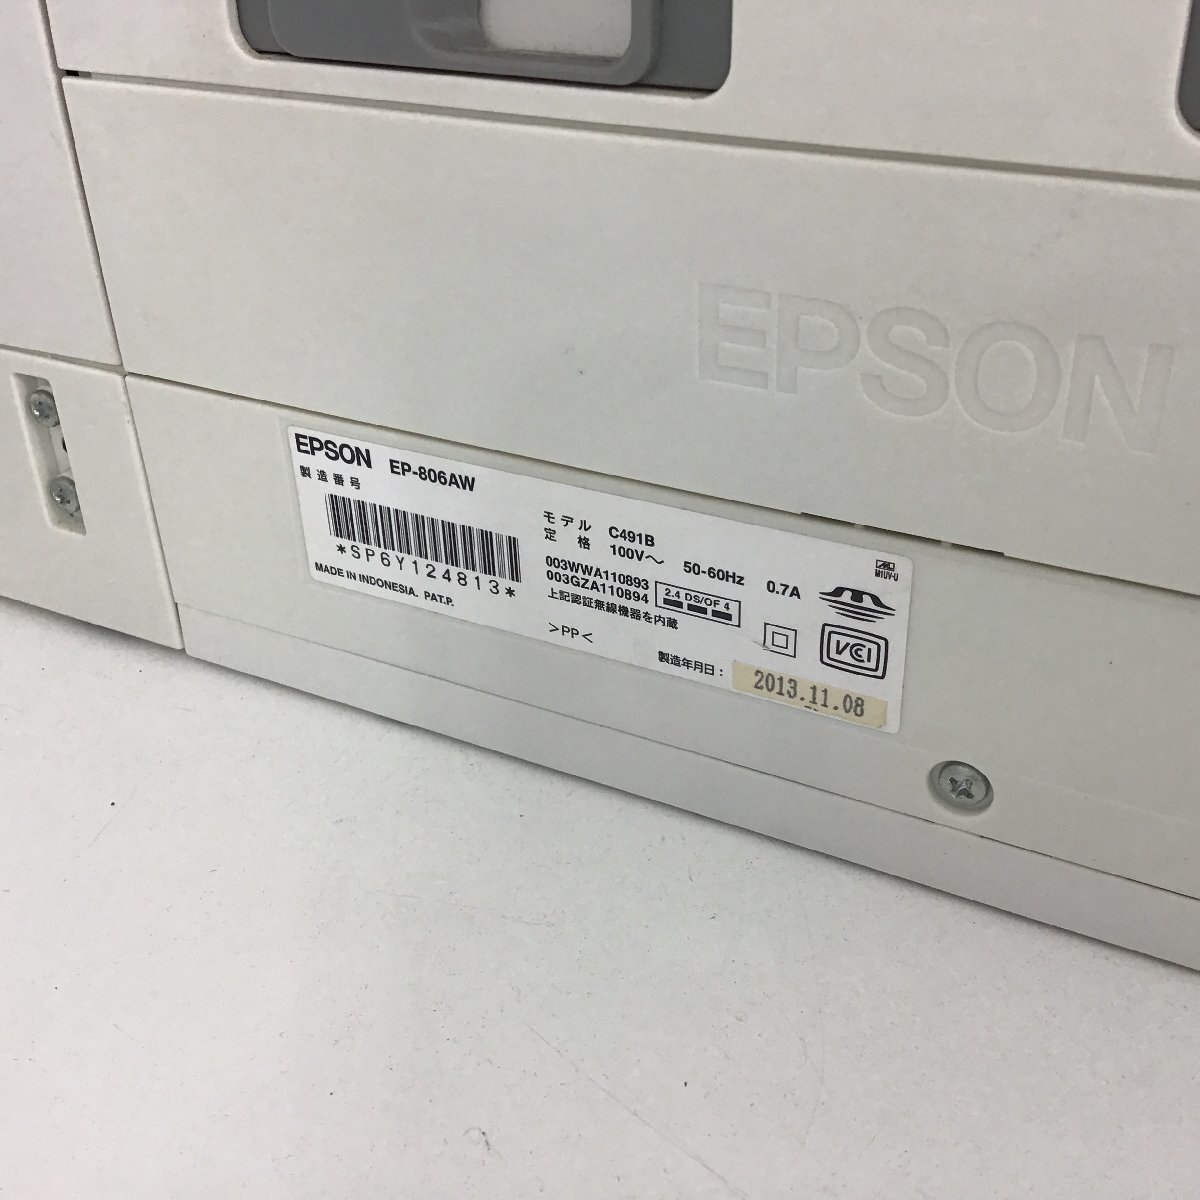 EPSON エプソン インクジェットプリンター 複合機 EP-806AW【同梱不可/売り切り/05-19】の画像10